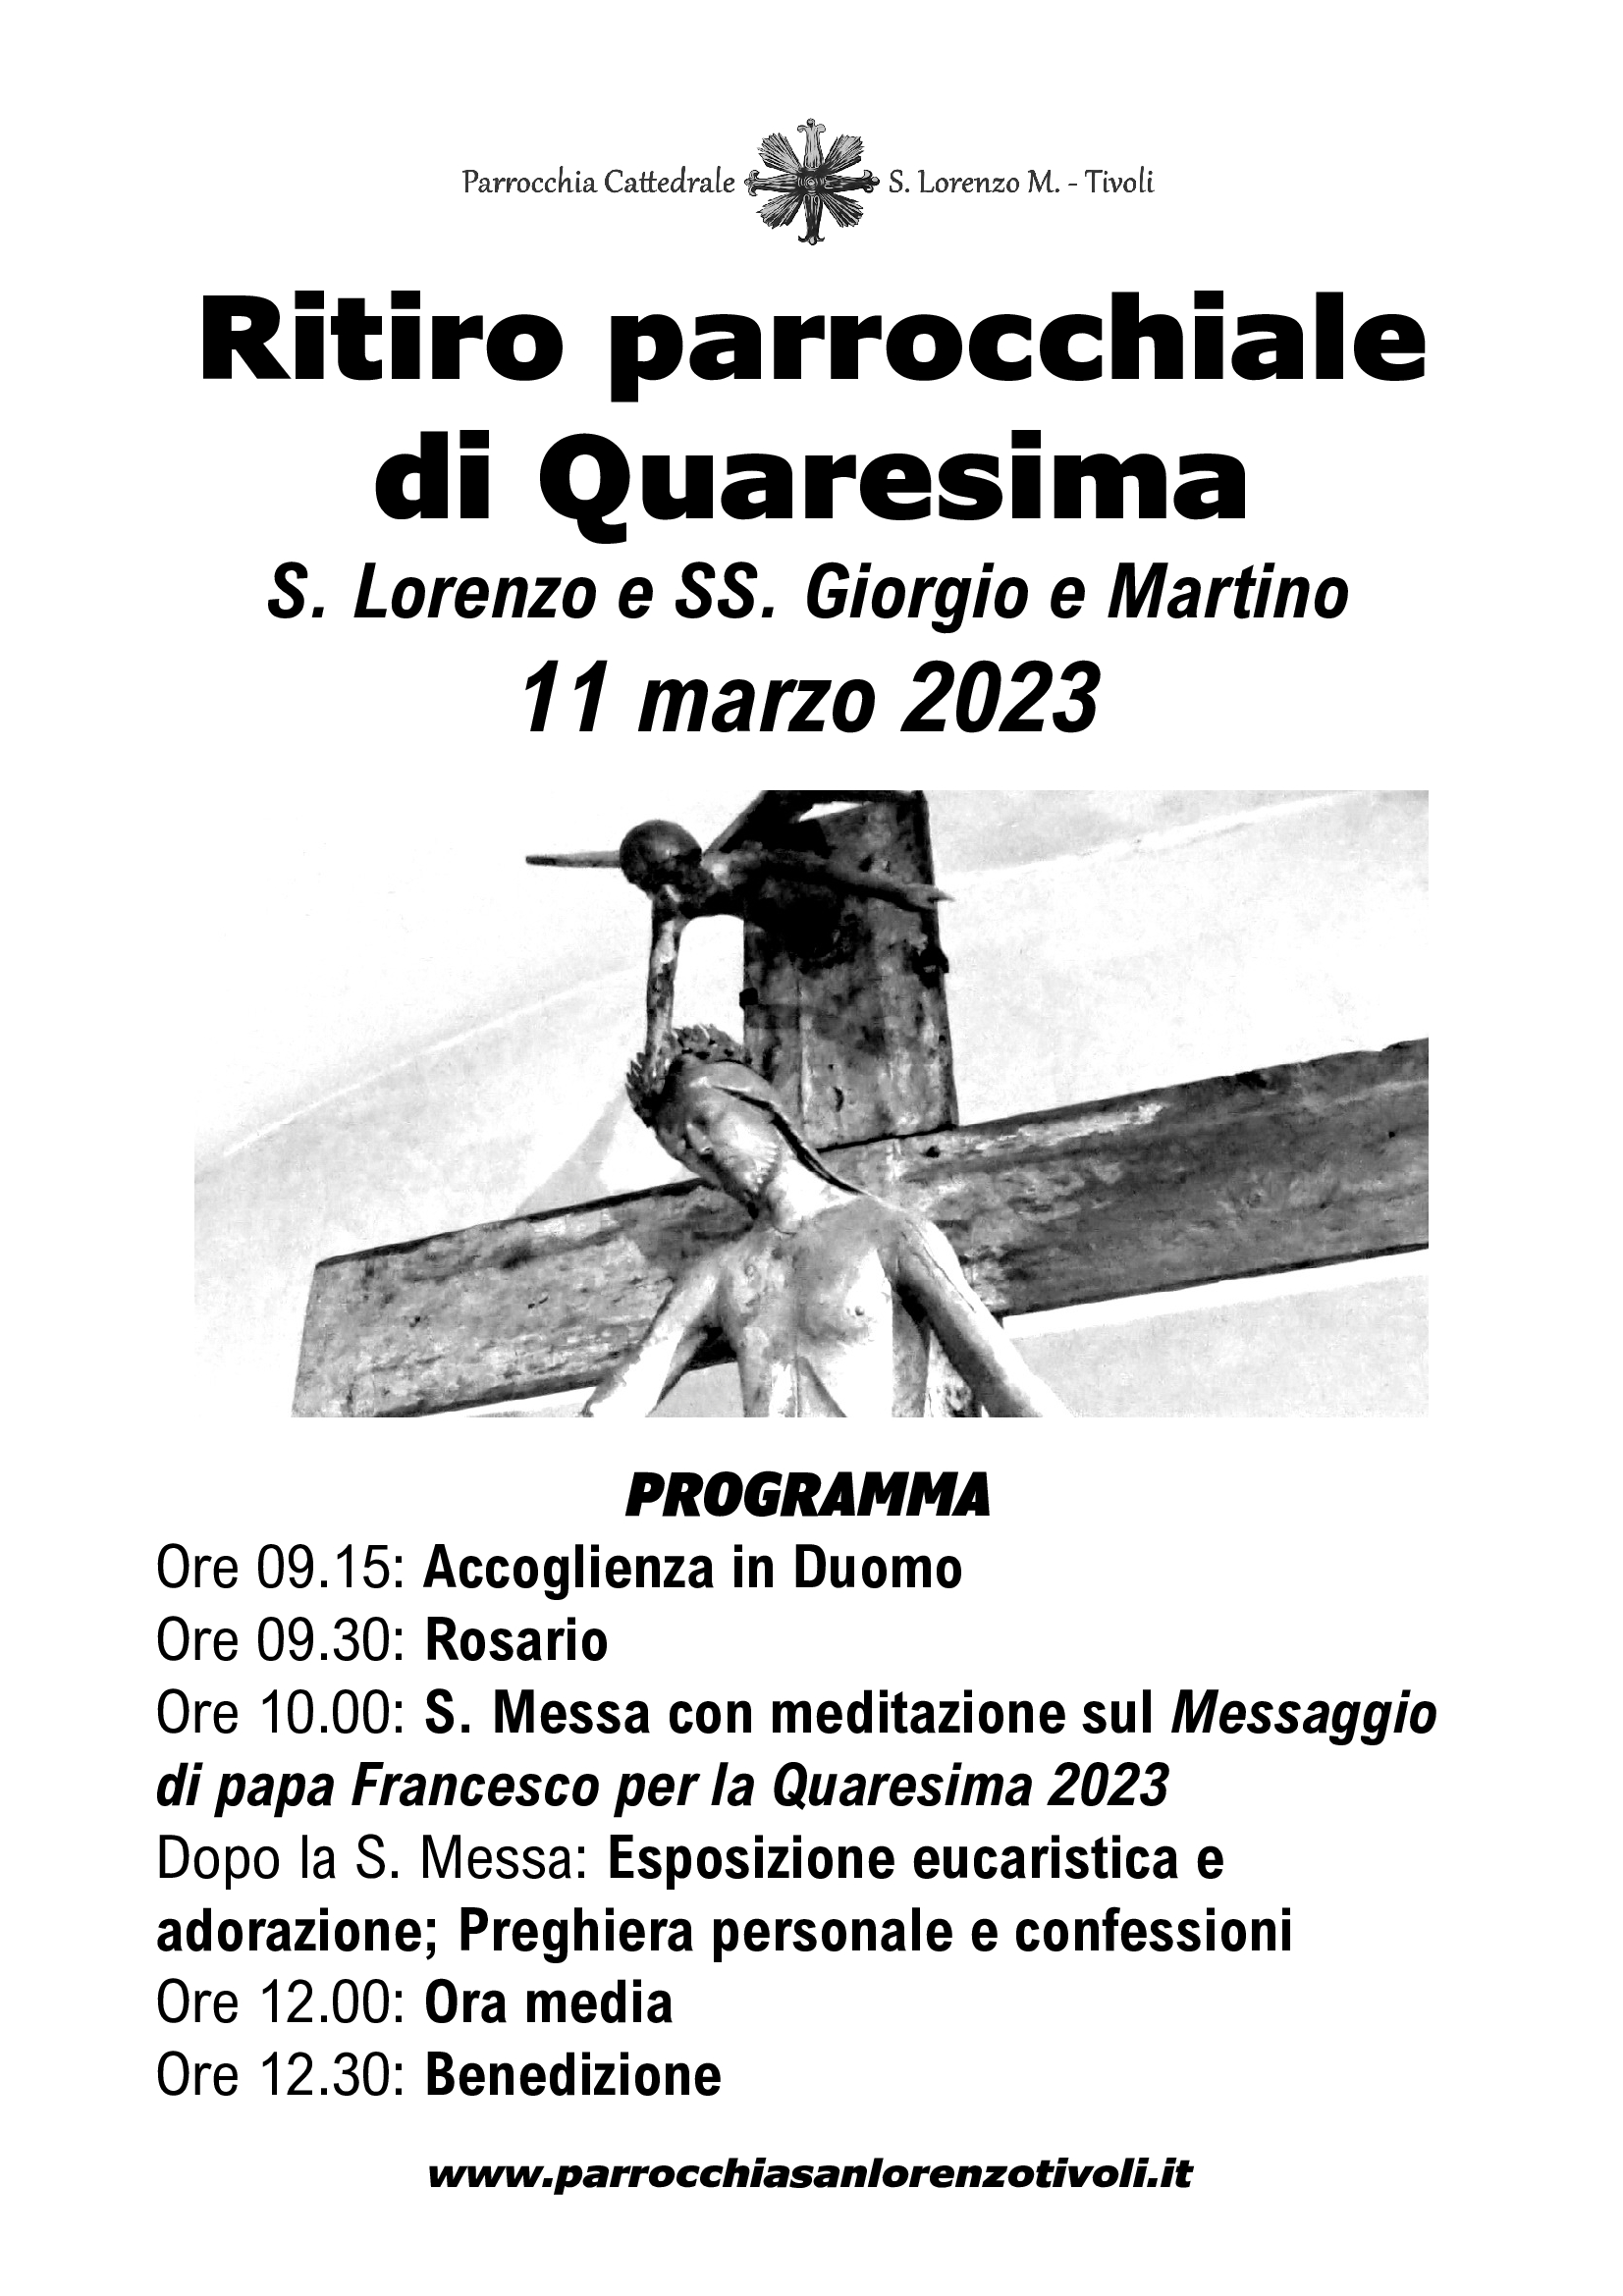 Ritiro di Quaresima in Duomo l’11 marzo 2023